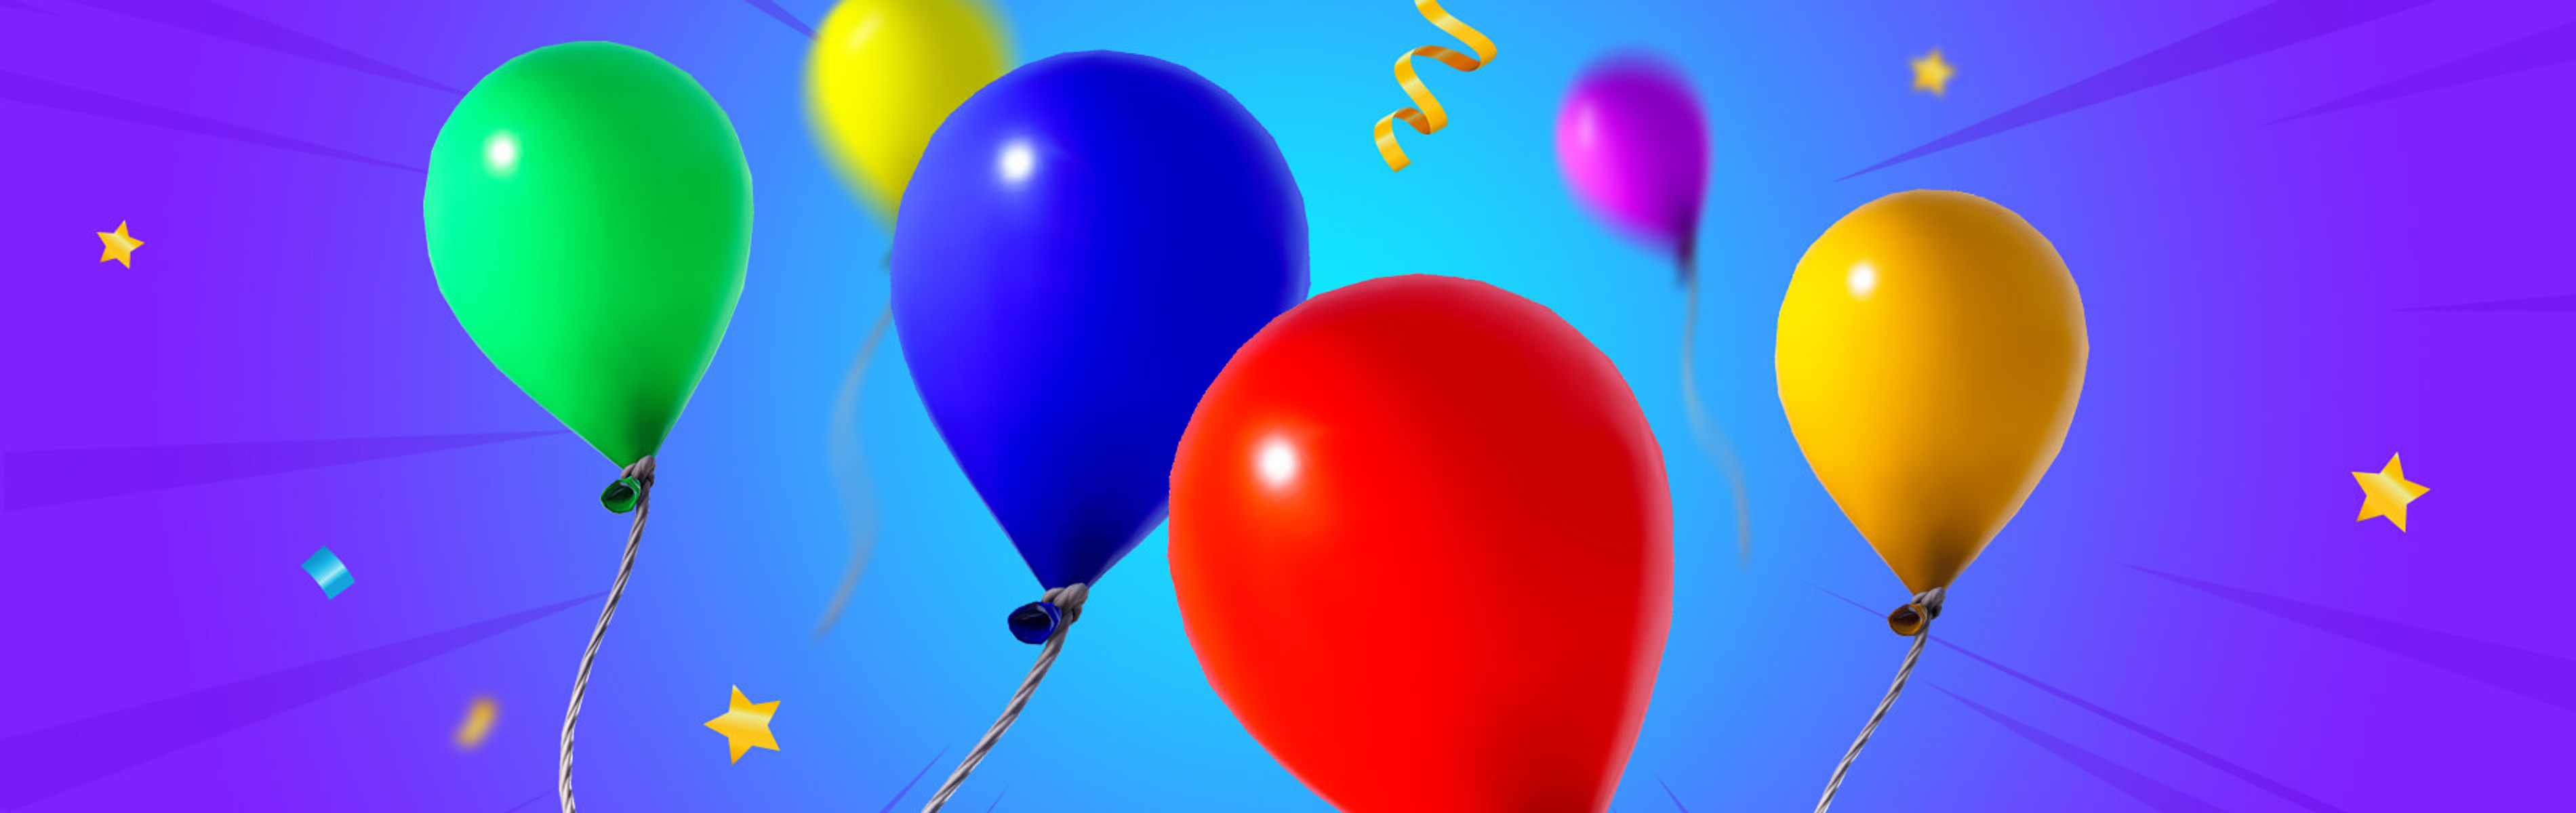 26br-fnbirthdayblog-header-balloons-1900x600-043285195c84